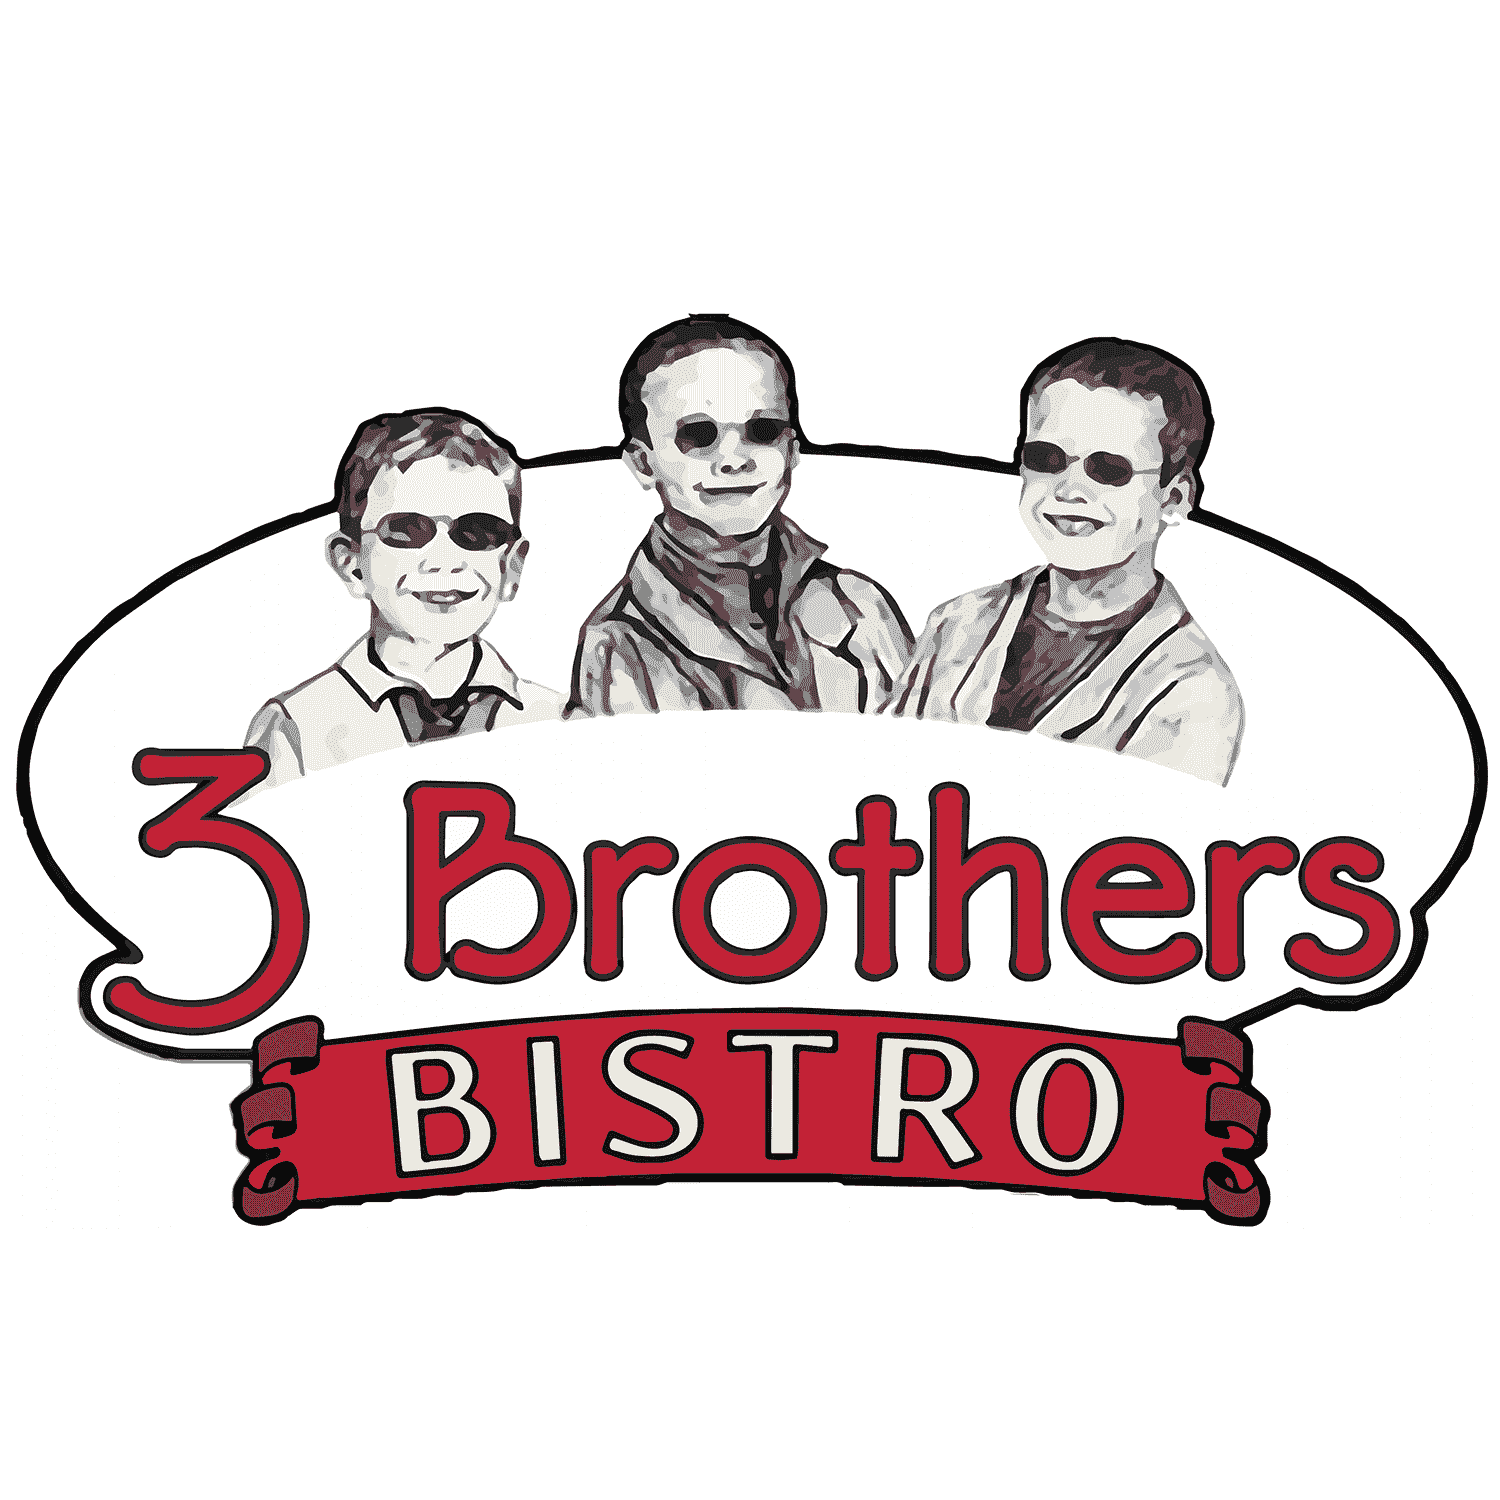 3 Brothers Bistro